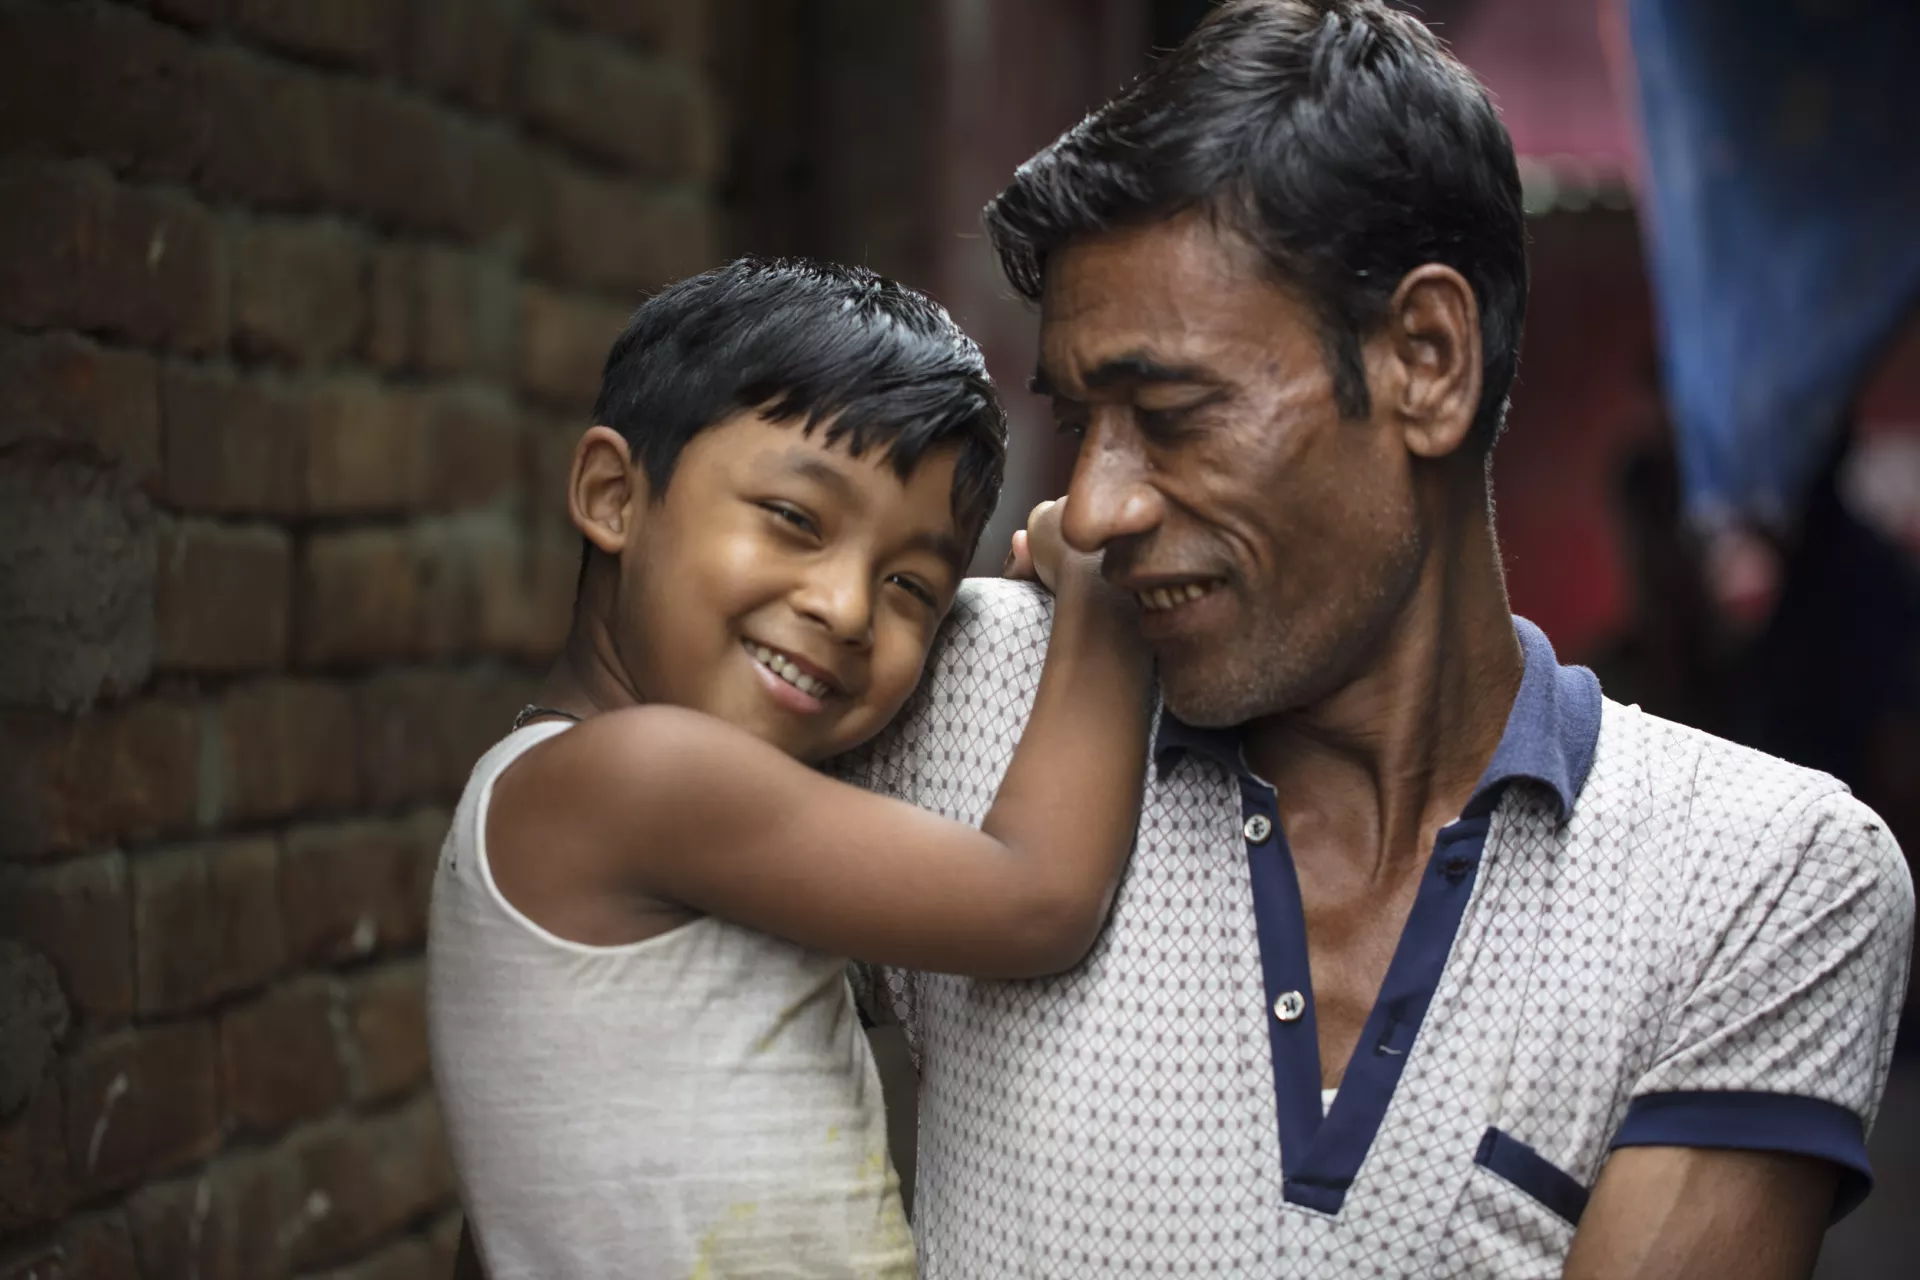 A Bangladeshi child and his father